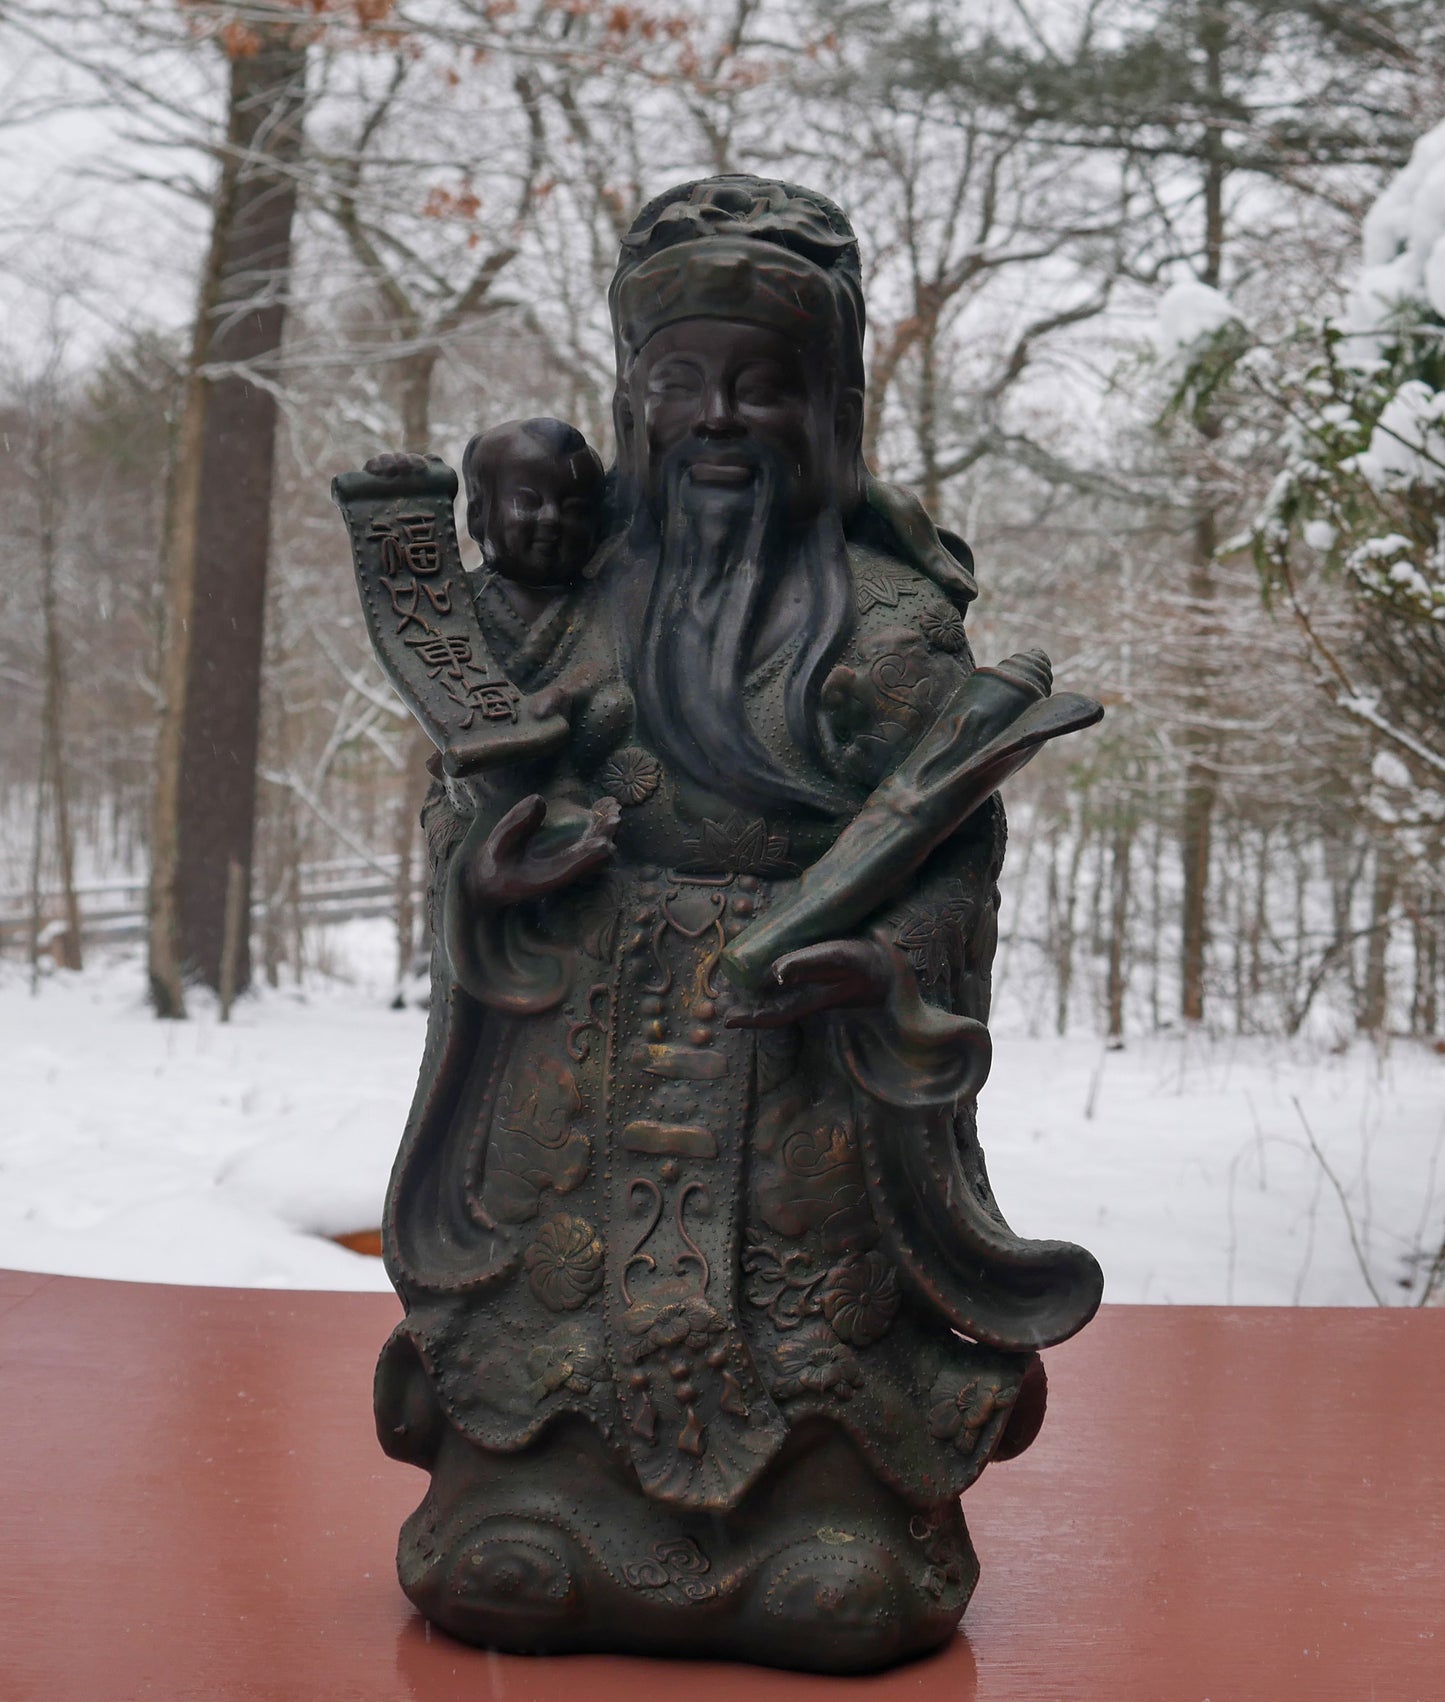 Chinese Ceramic Fu Lu Shou Longevity God Old Wise Man Statue Sculpture 19" Tall